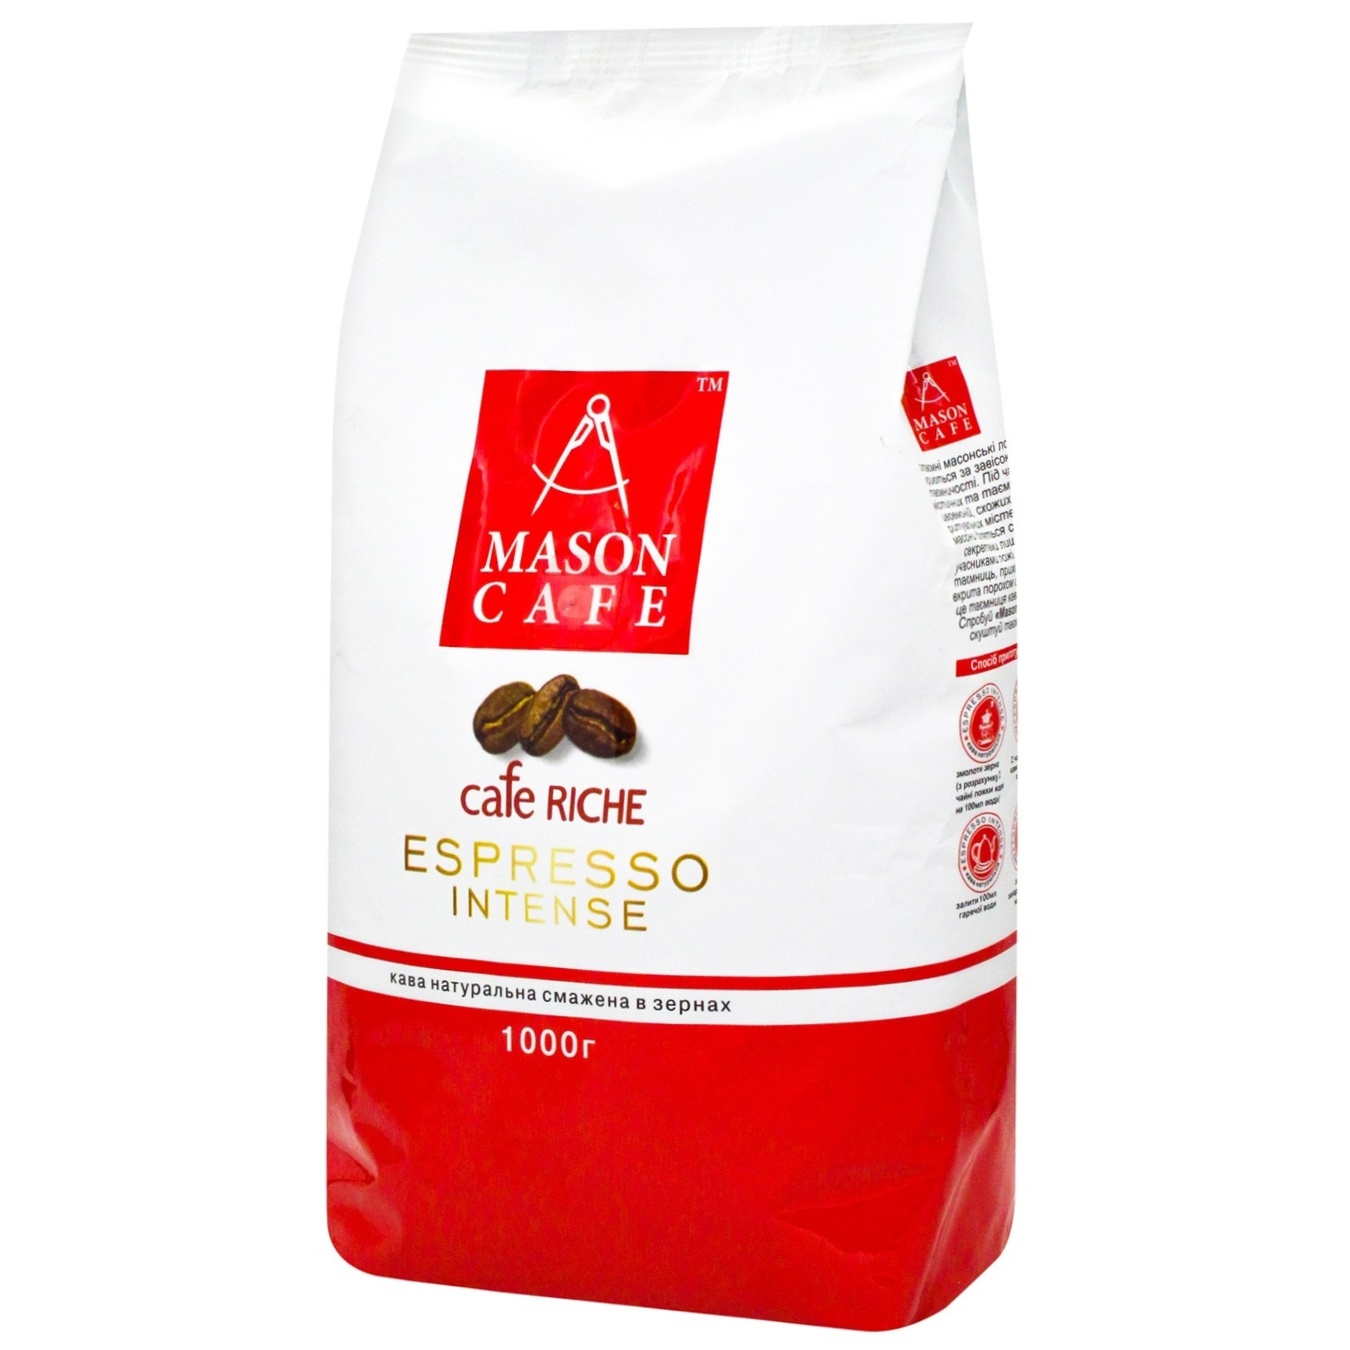 Coffee beans Espresso Intense Mason cafe roasted 1kg bag